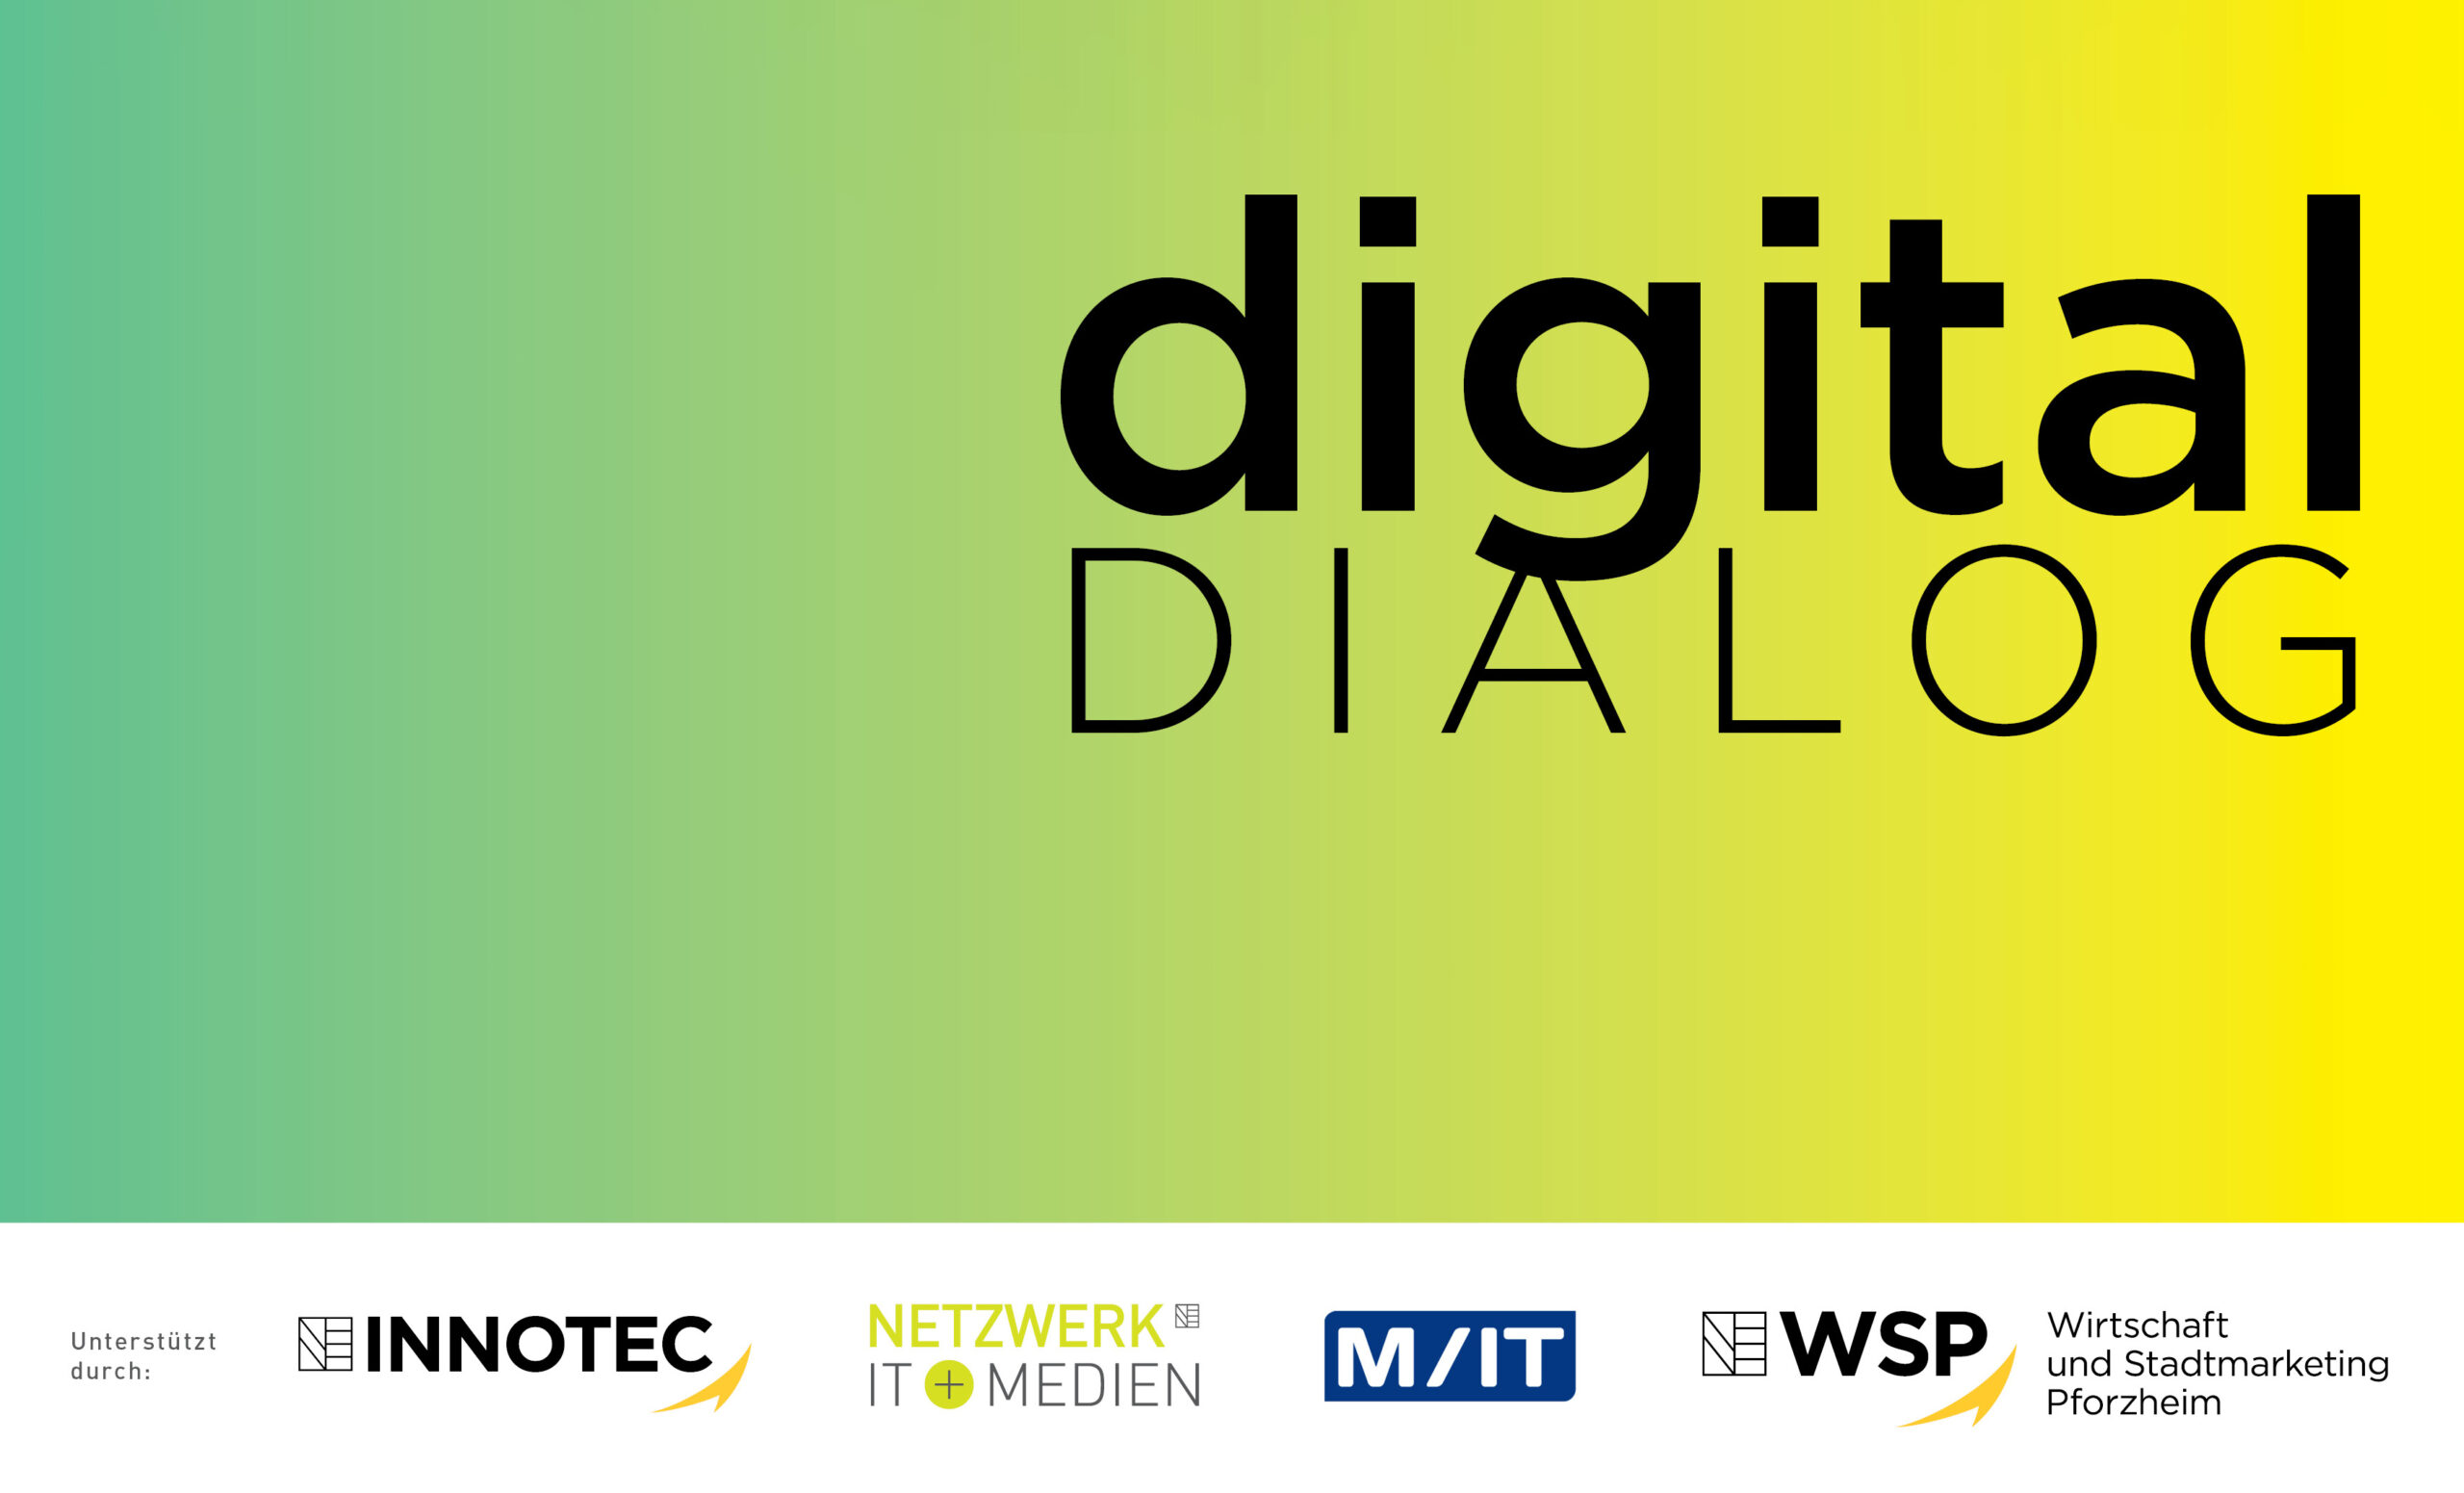 Digital Dialog